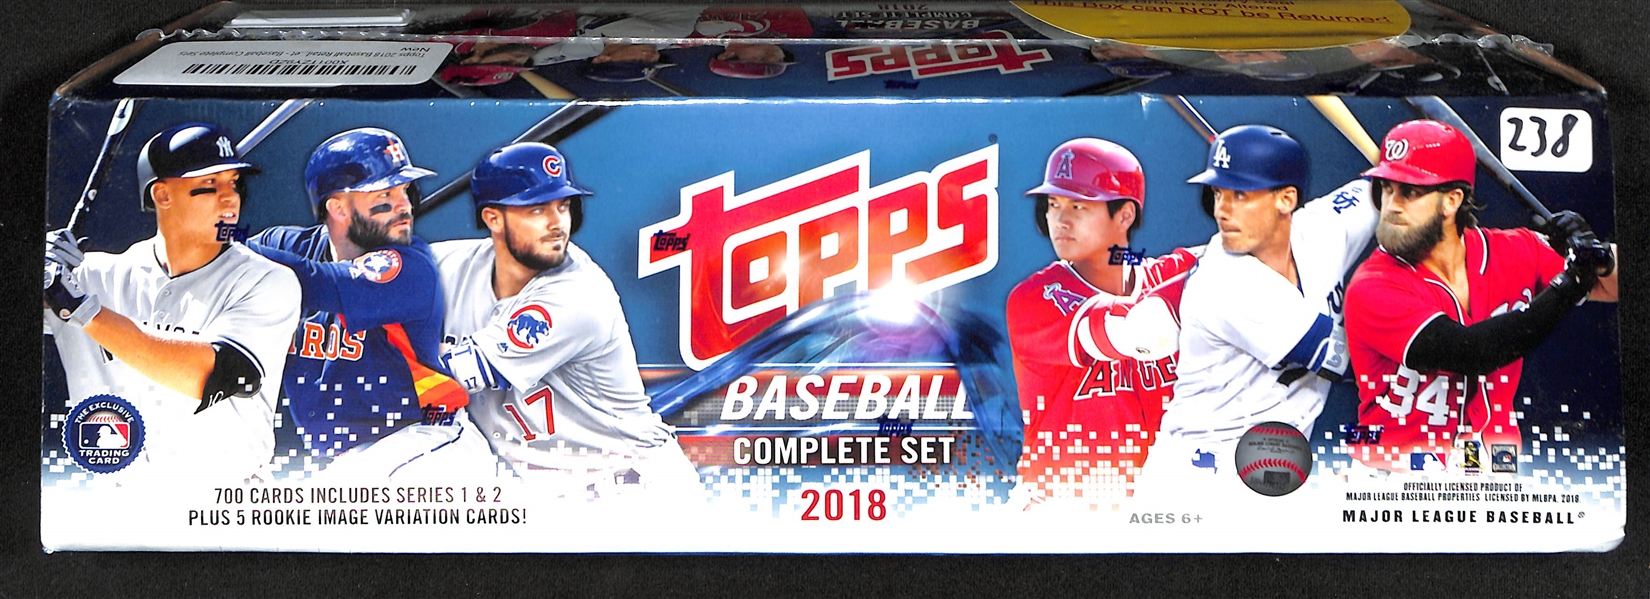 2018 Topps Baseball Complete Factory Sealed Set w/ Shohei Ohtani Rookie Variation